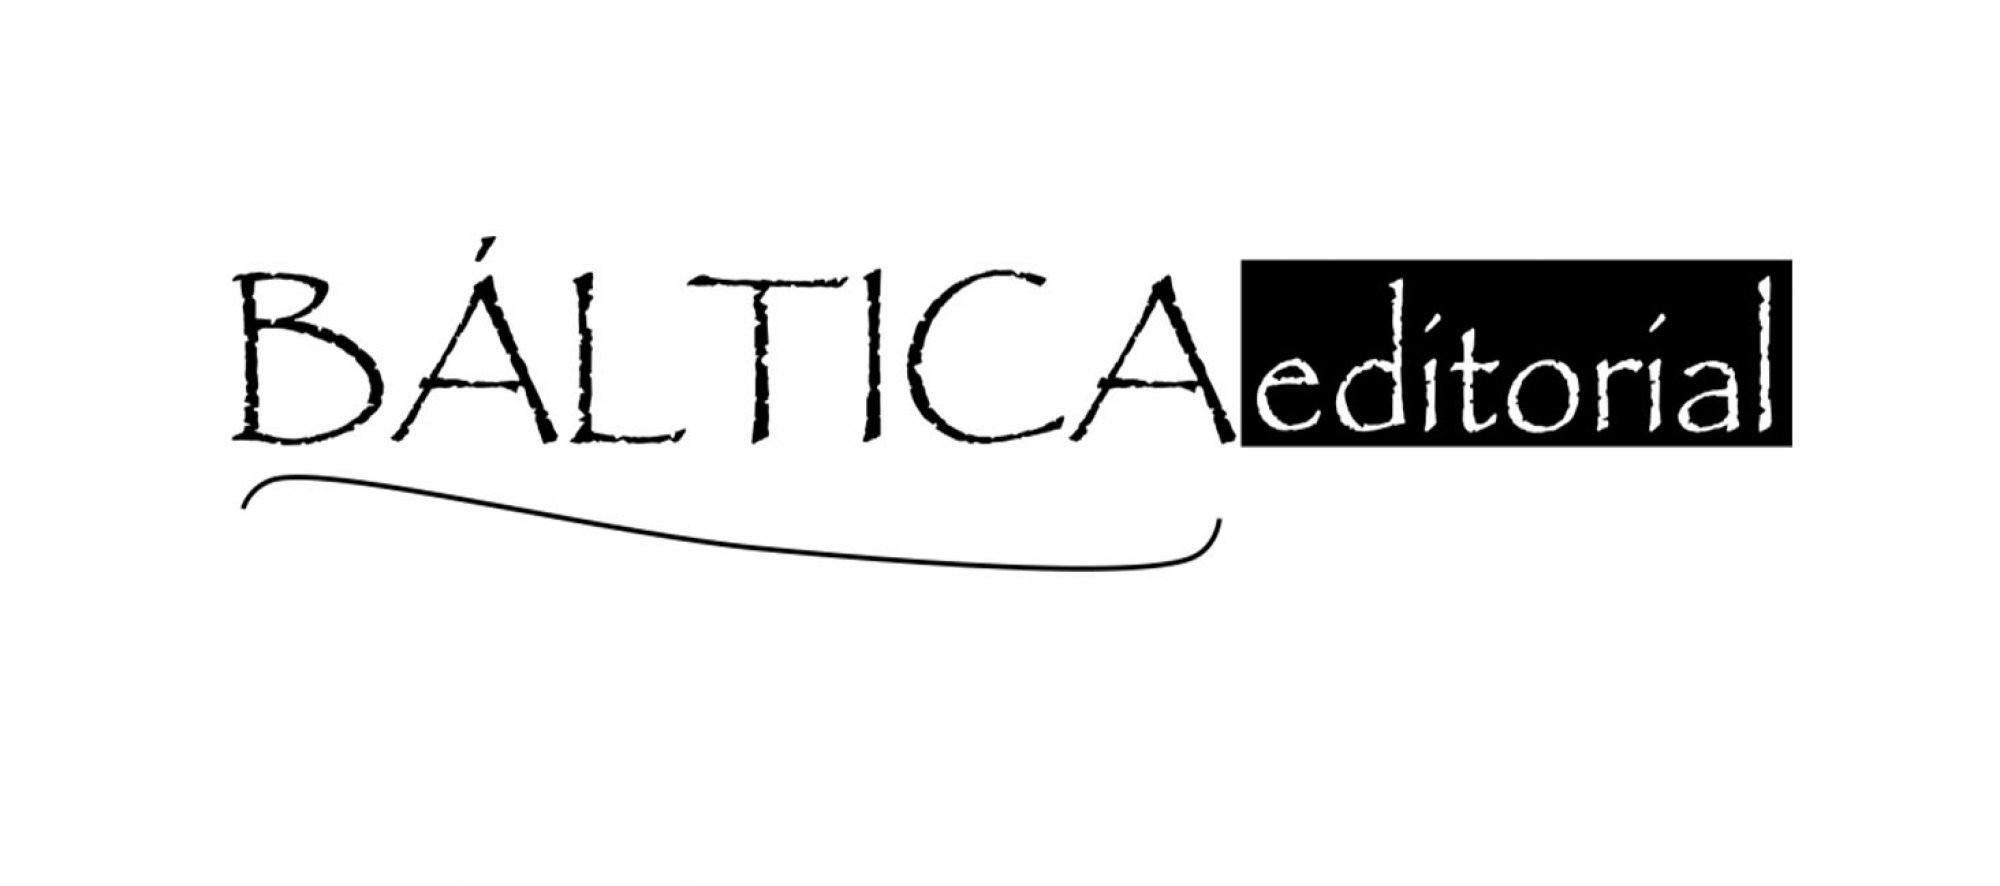 Báltica Editorial